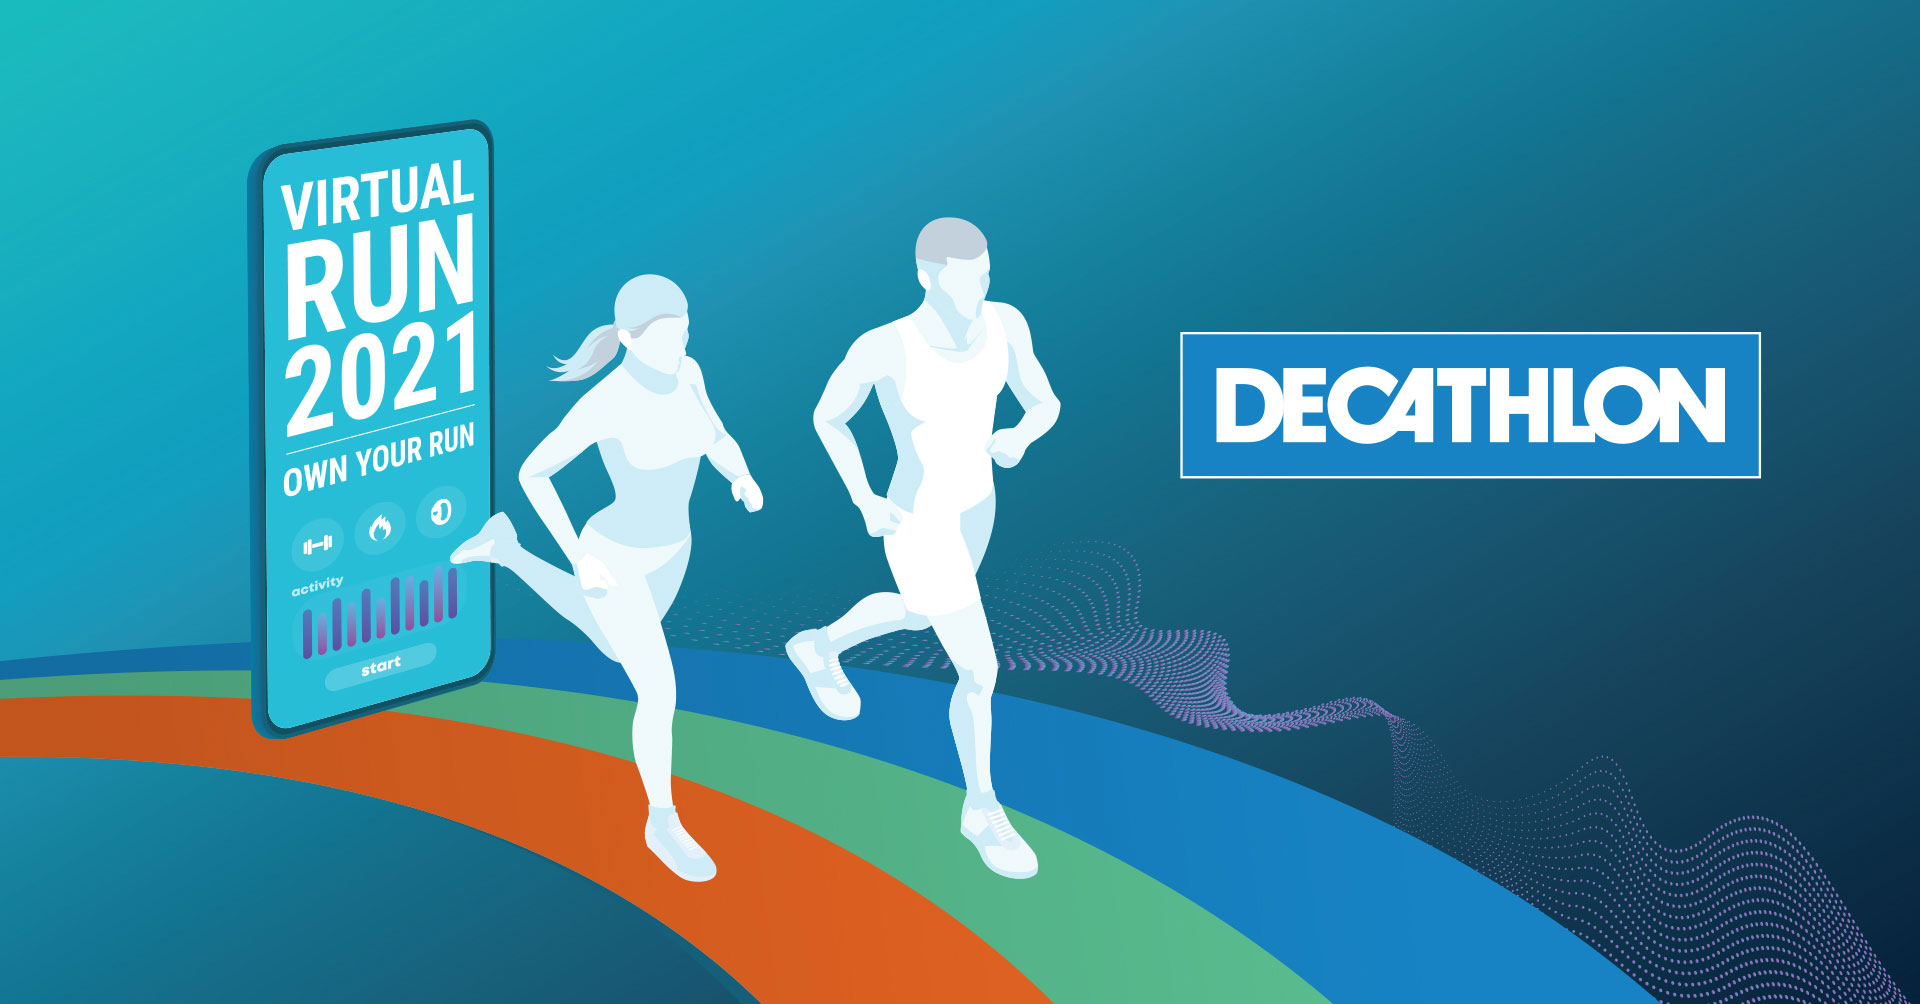 Decathlon Virtual Run 2021 Connect by JustRunLah!